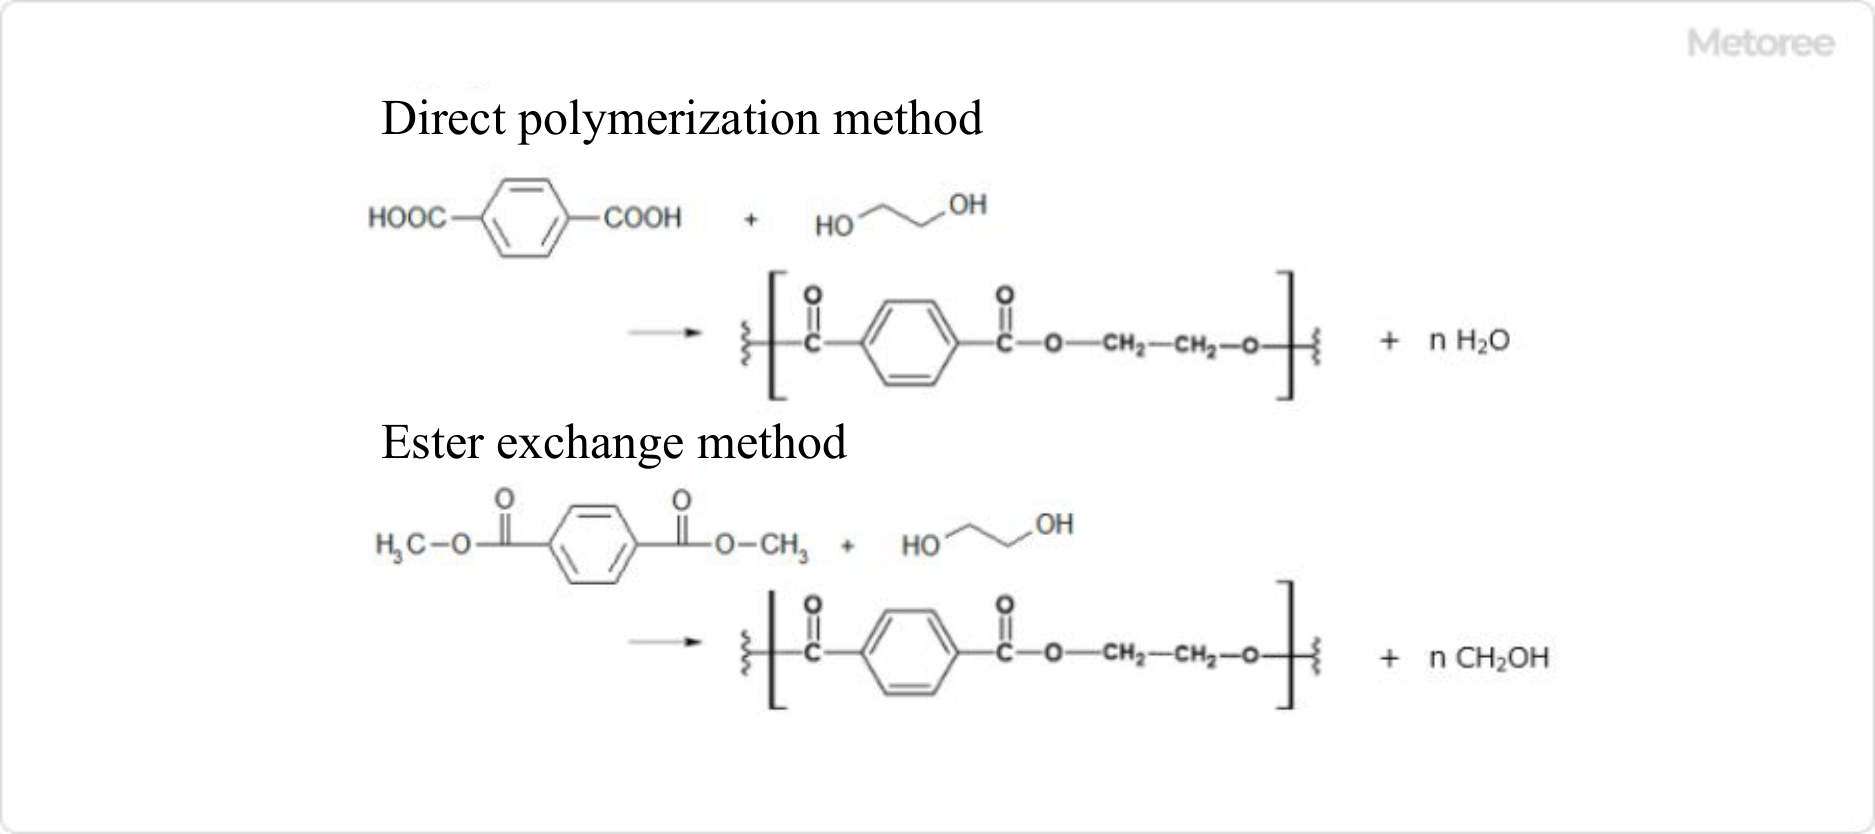 Figure 1. Production process for polyethylene terephthalate (PET)